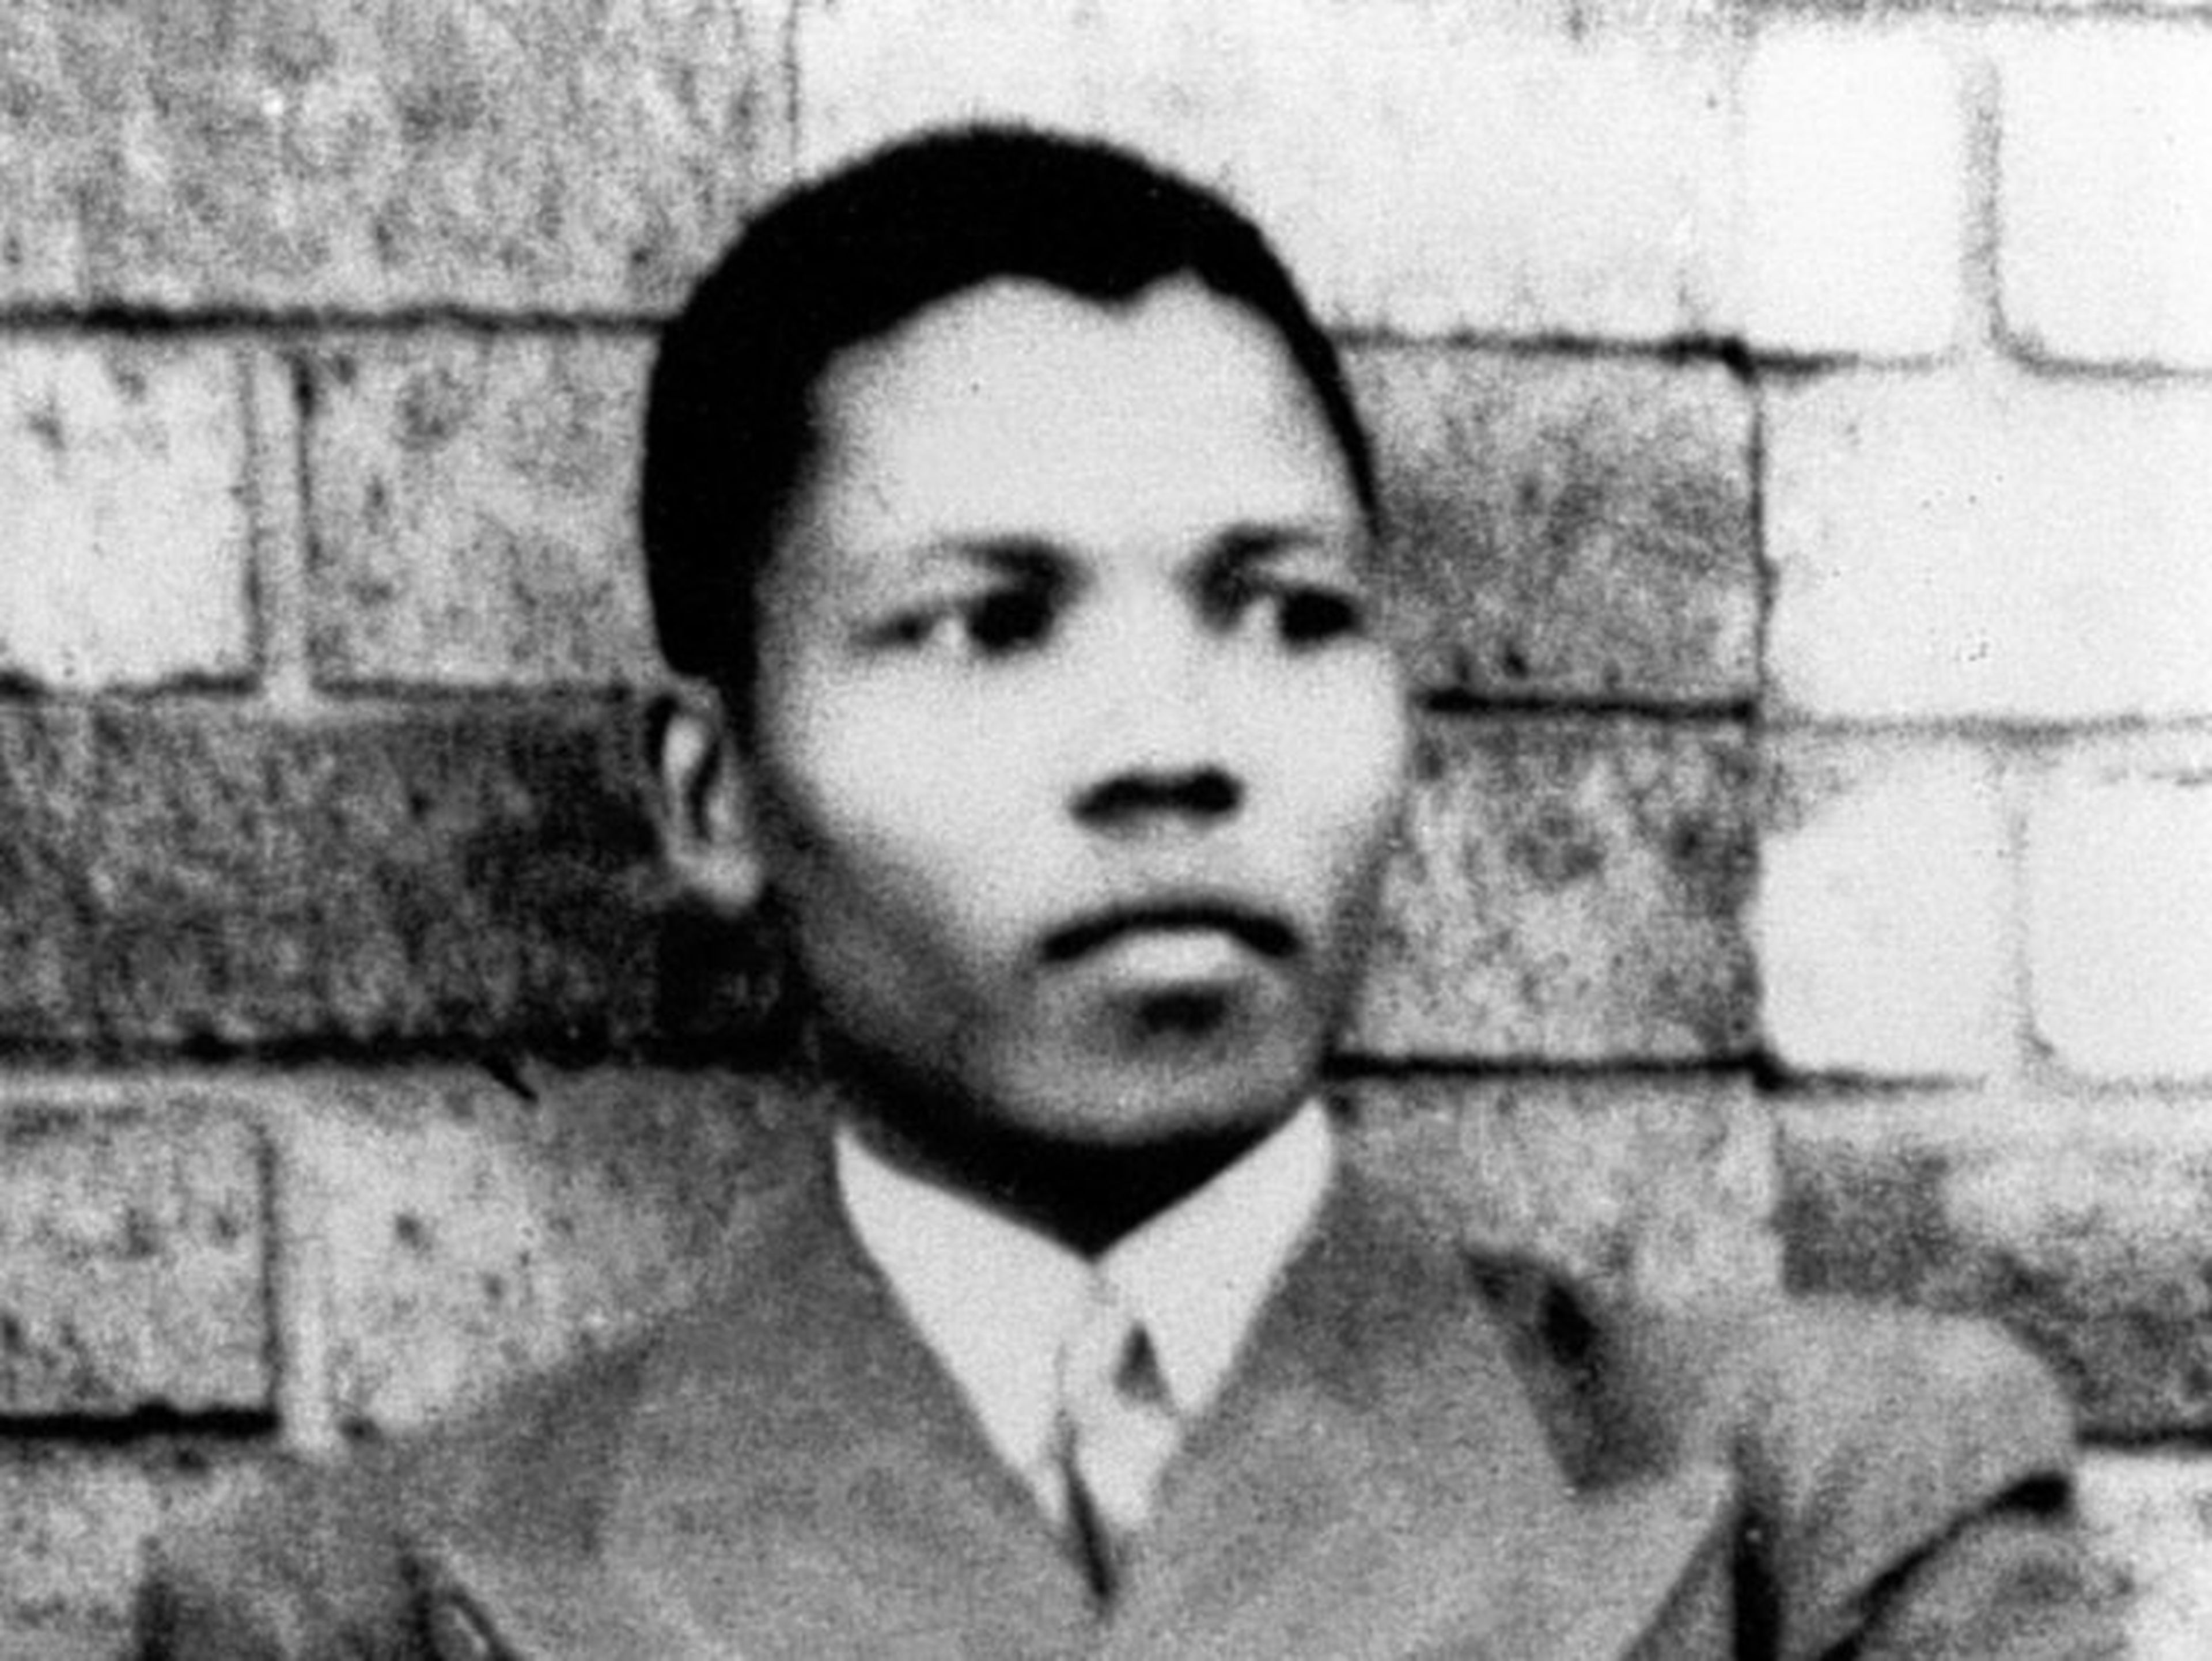 Mandela de joven